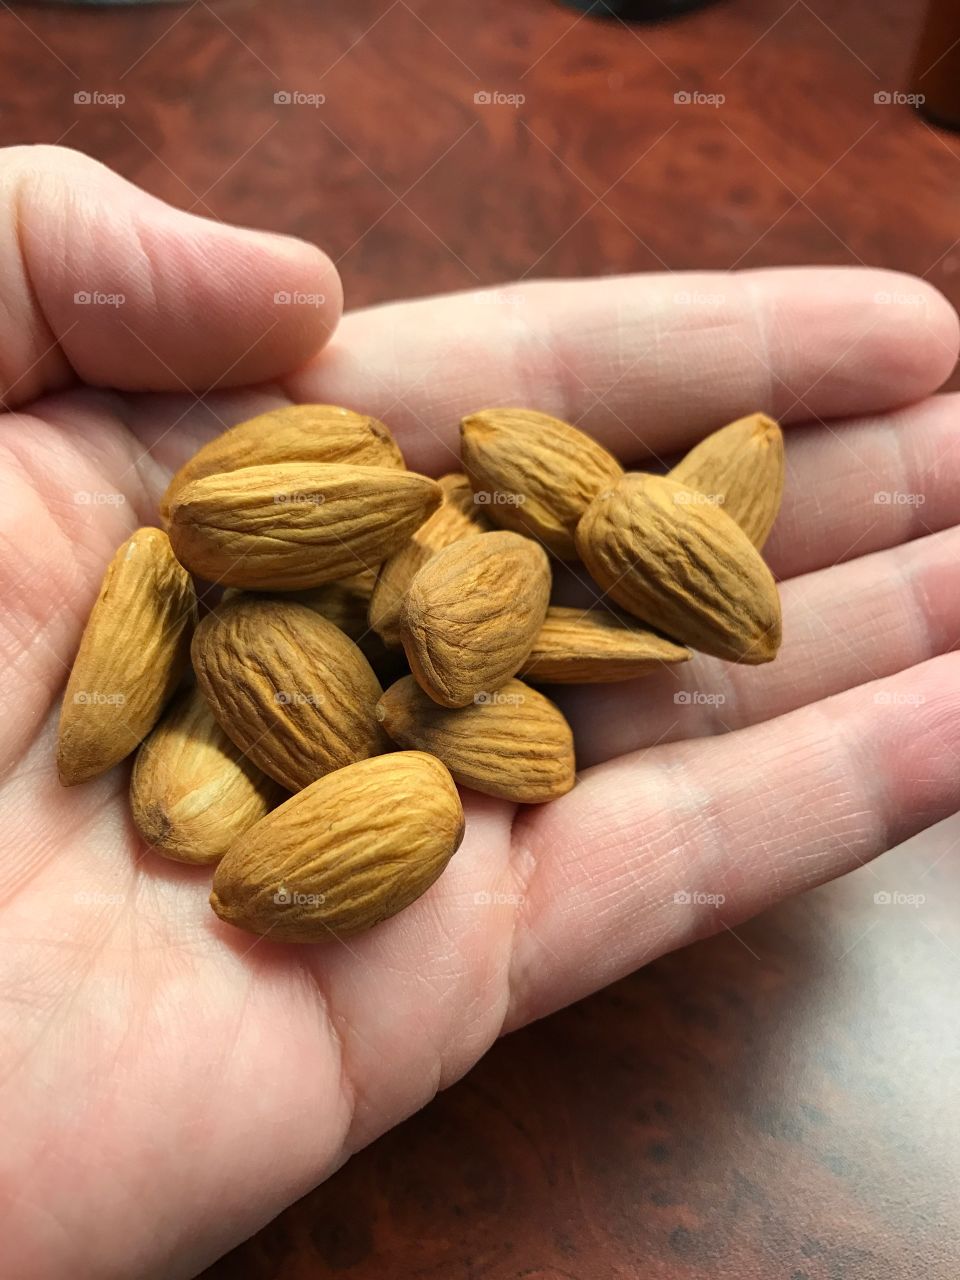 Raw almonds texture 